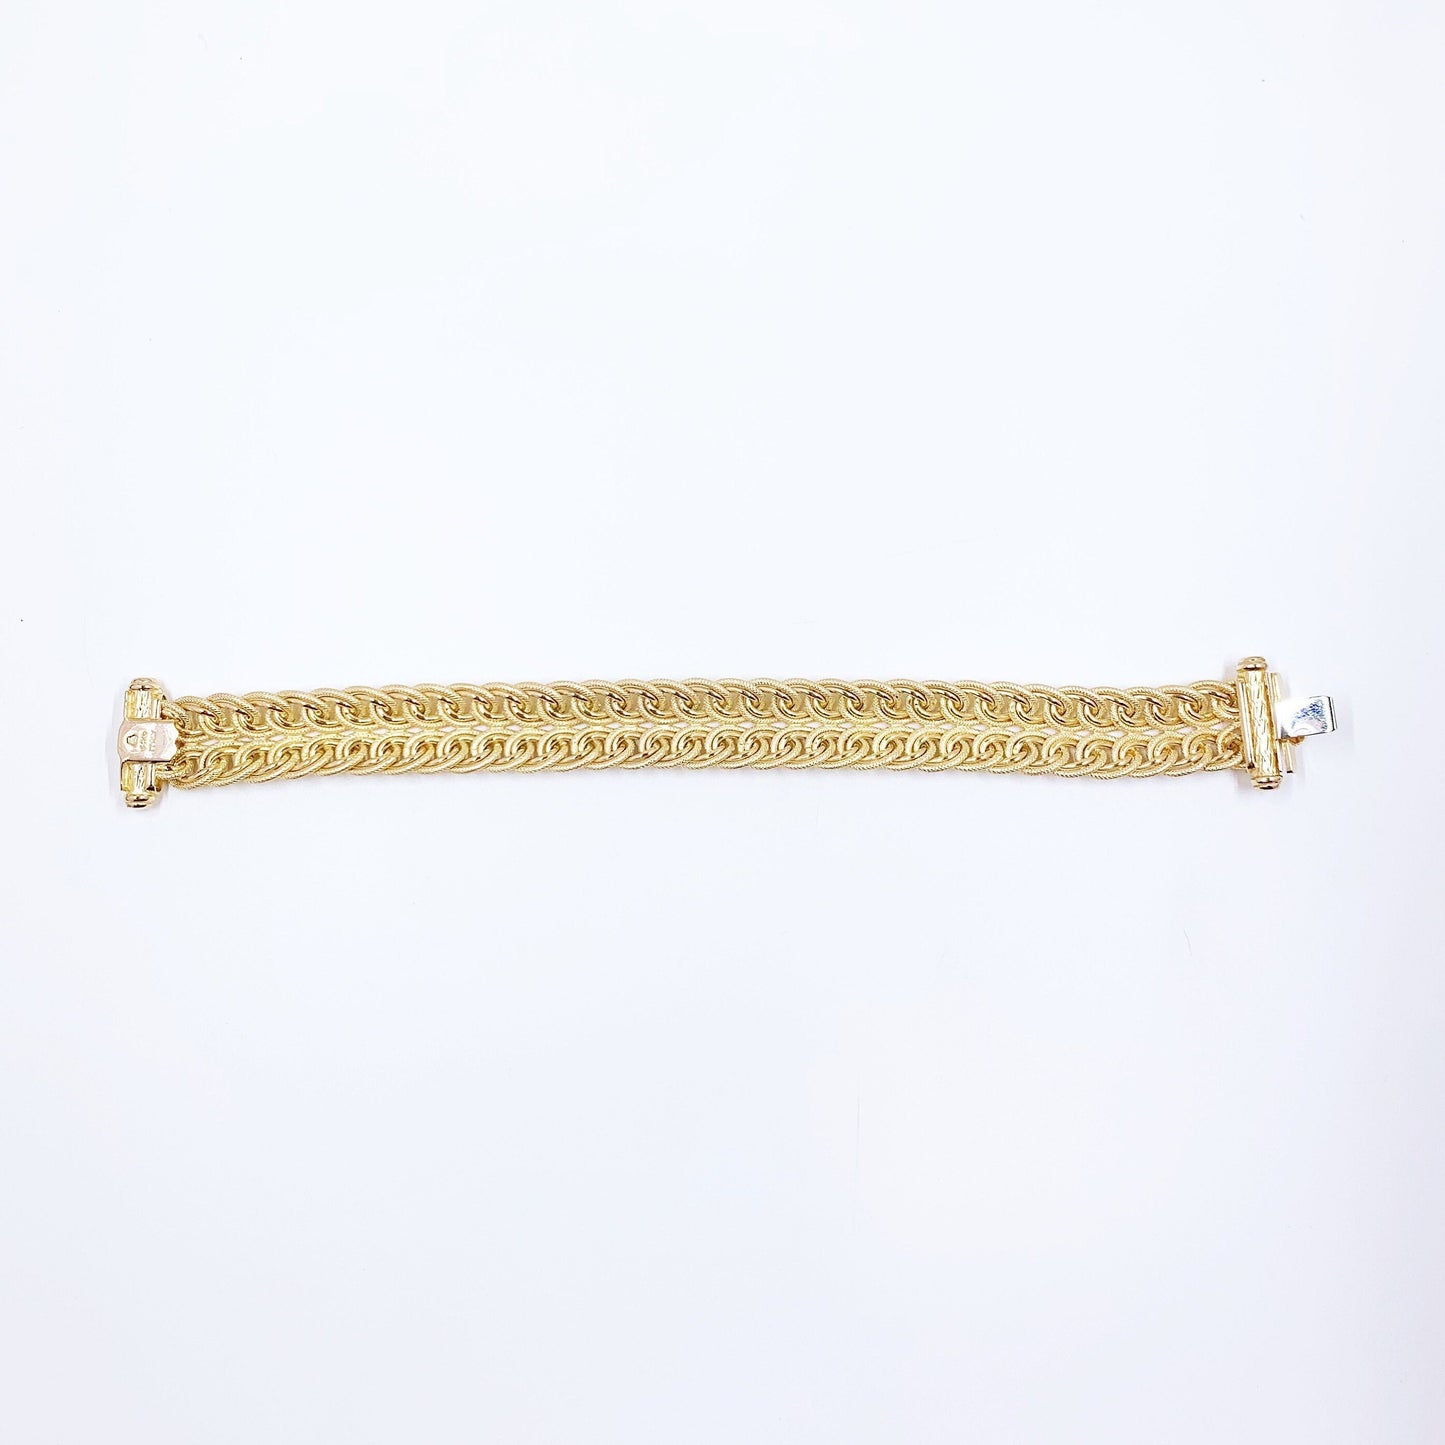 Vintage 14k Italian Gold Textured Link Woven Bracelet | 7.6875 inch Gold Bracelet | 14.8 mm Bracelet